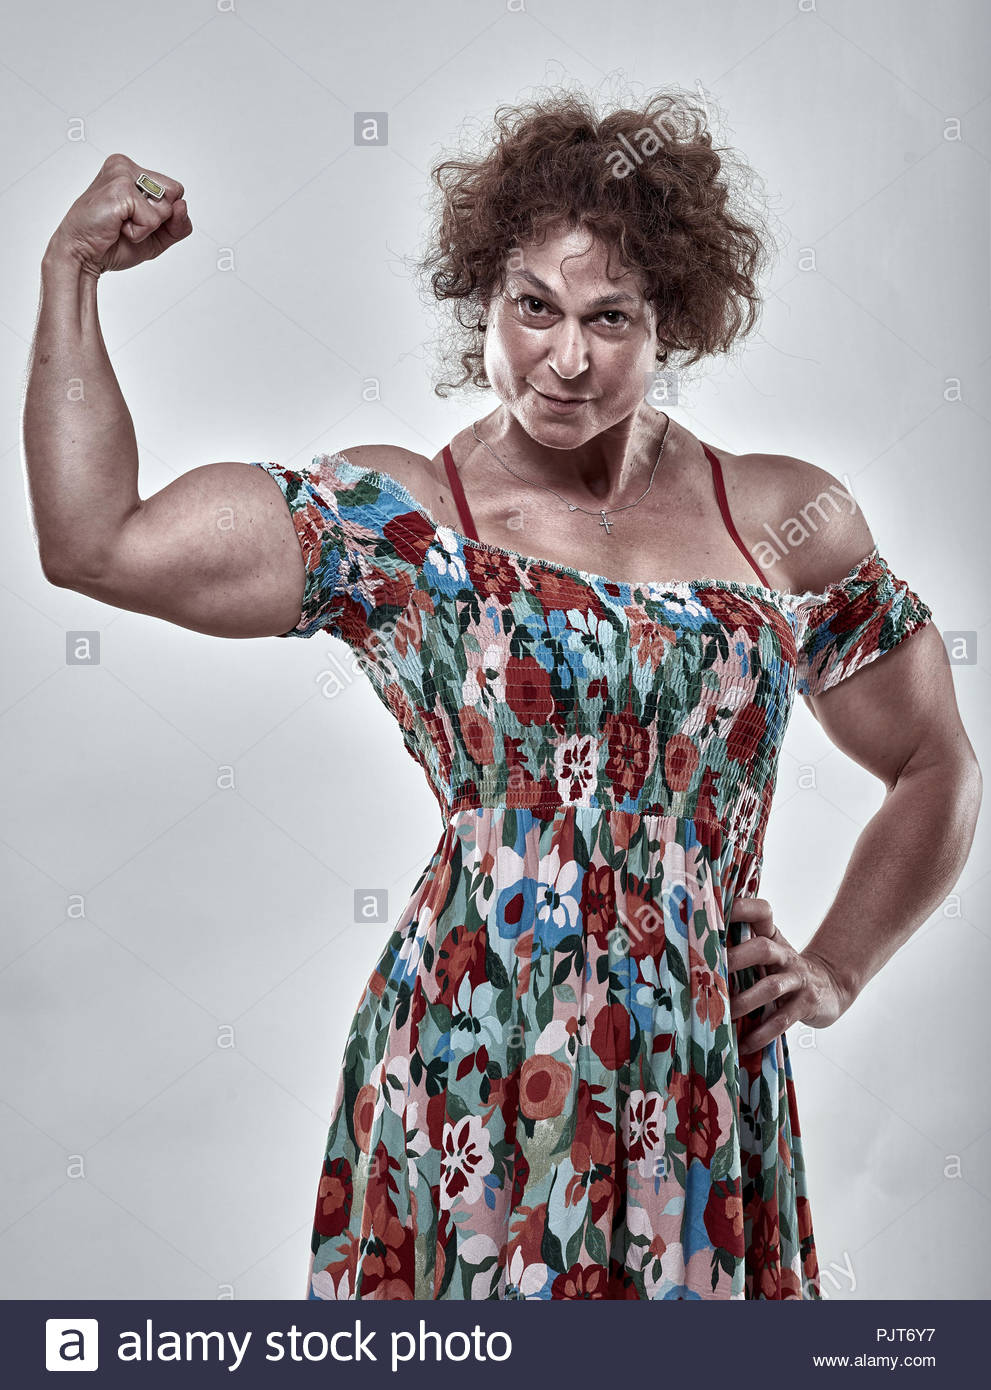 girls-power-metaphor-with-muscular-mature-woman-flexing-biceps-PJT6Y7.jpg